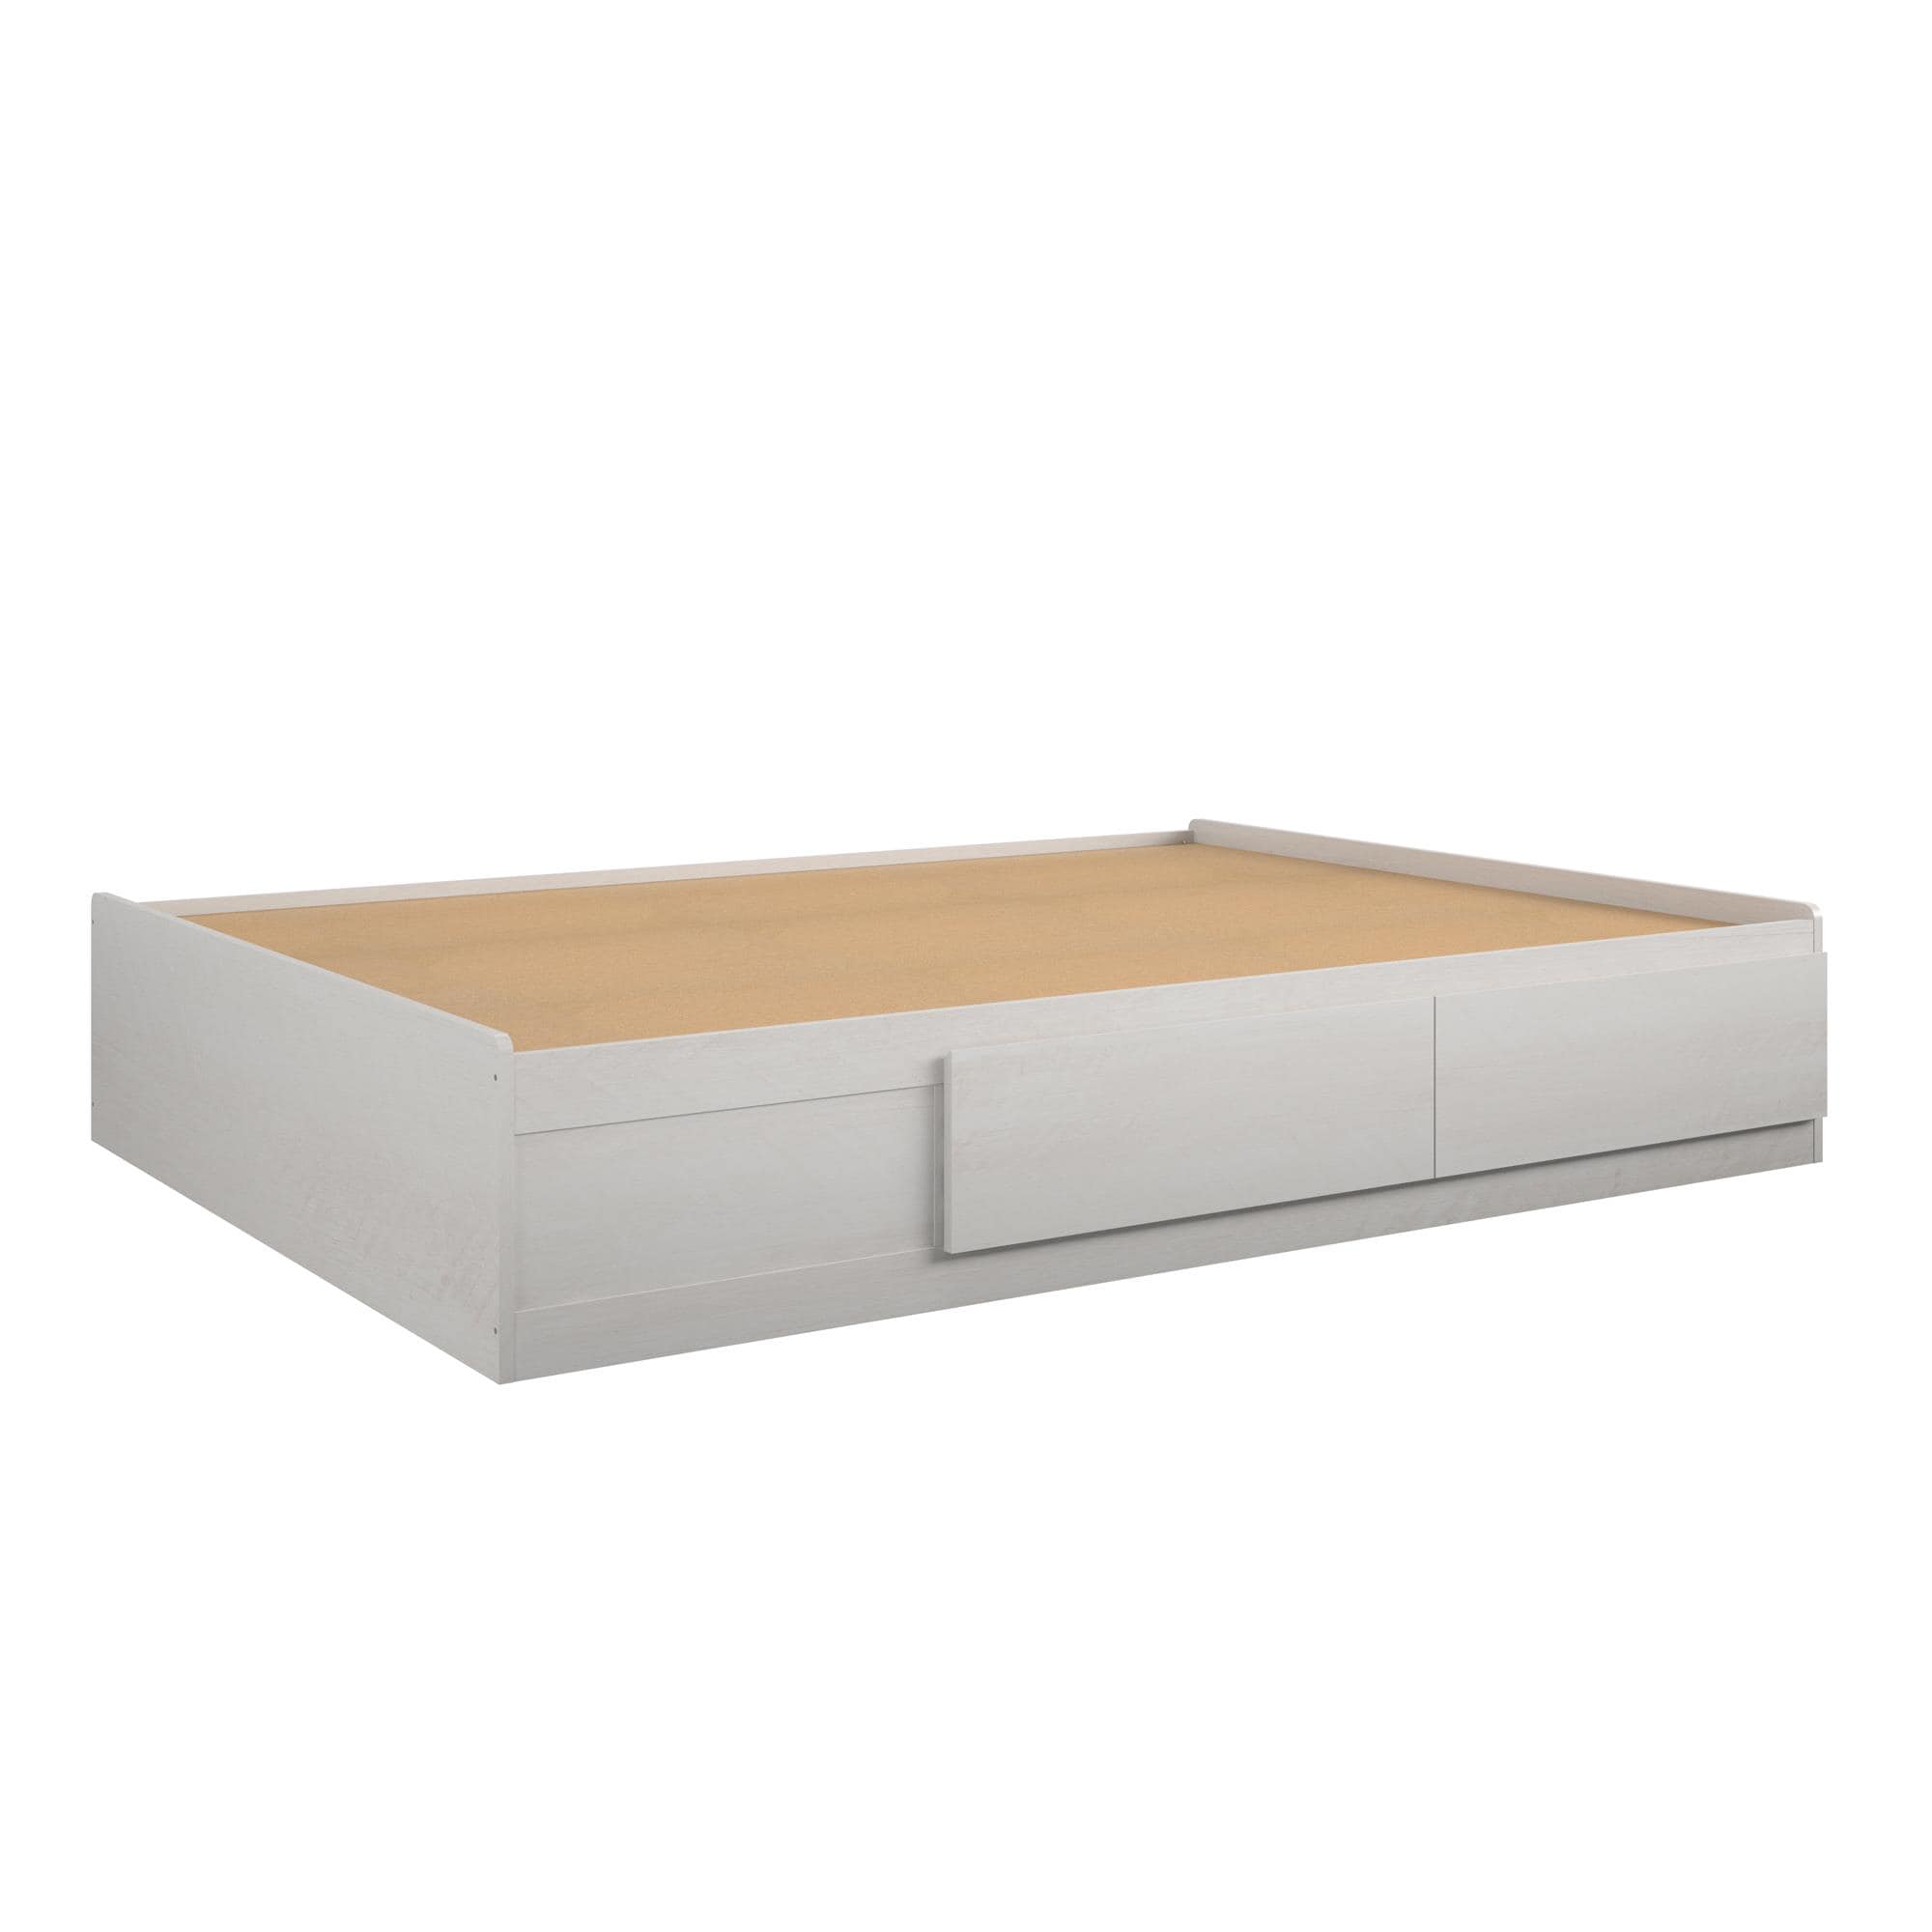 Ameriwood Home Platform Bed Ivory Oak, Ameriwood Twin Storage Bed Reviews